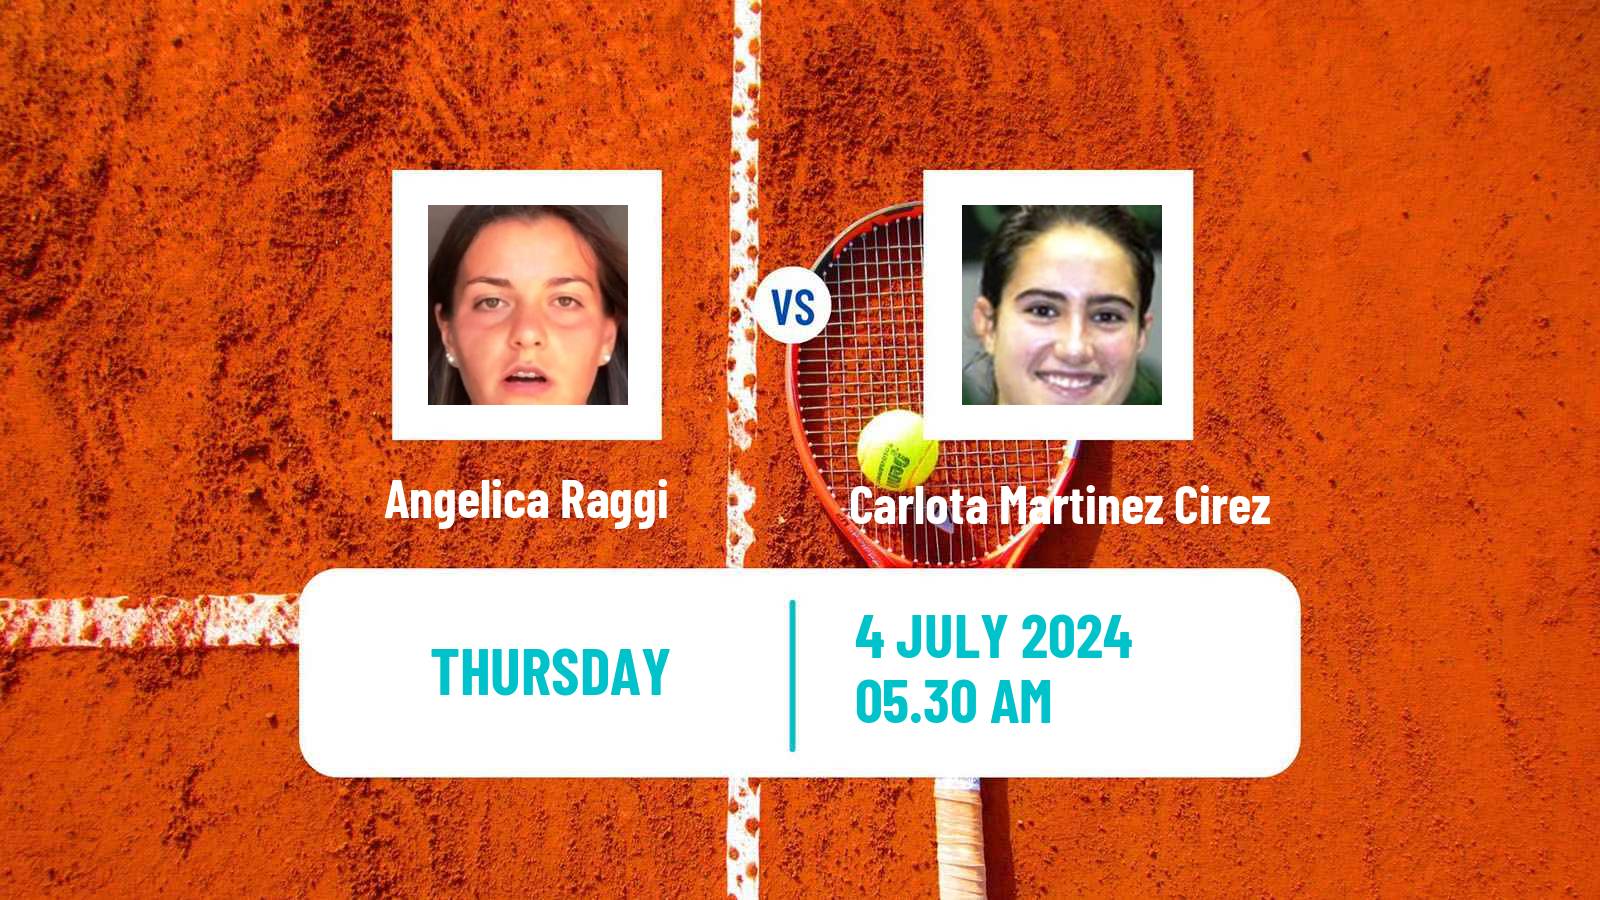 Tennis ITF W35 Rome Women Angelica Raggi - Carlota Martinez Cirez